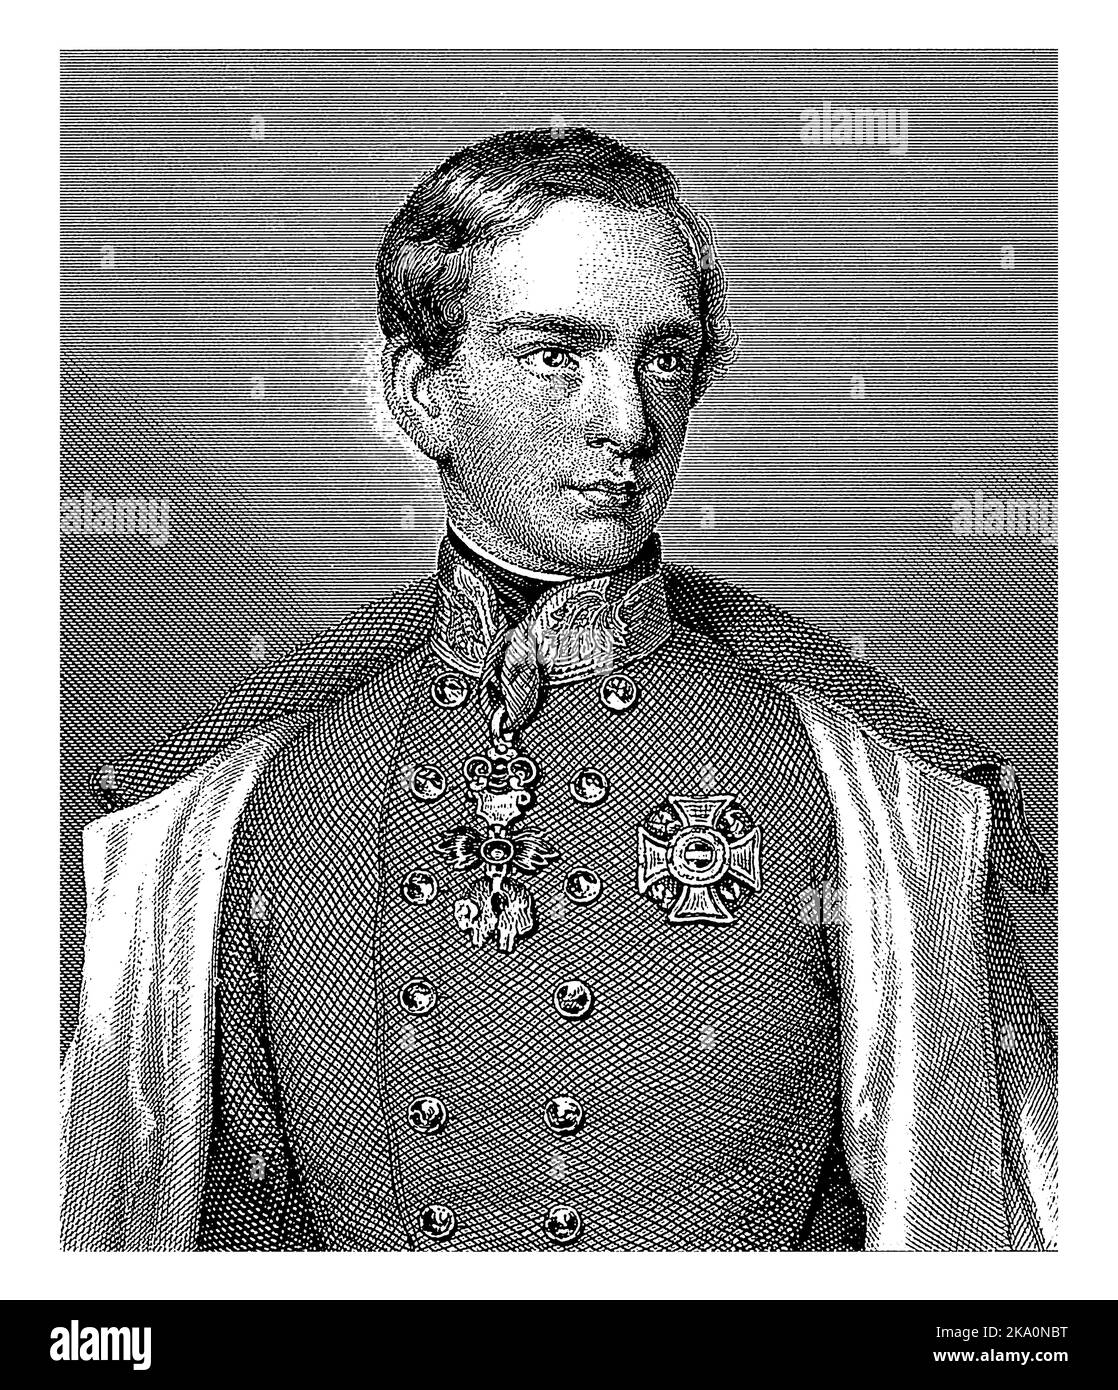 Portrait of Franz Joseph I Charles, Emperor of Austria, Johann Georg Nordheim, 1840 - 1855 Stock Photo